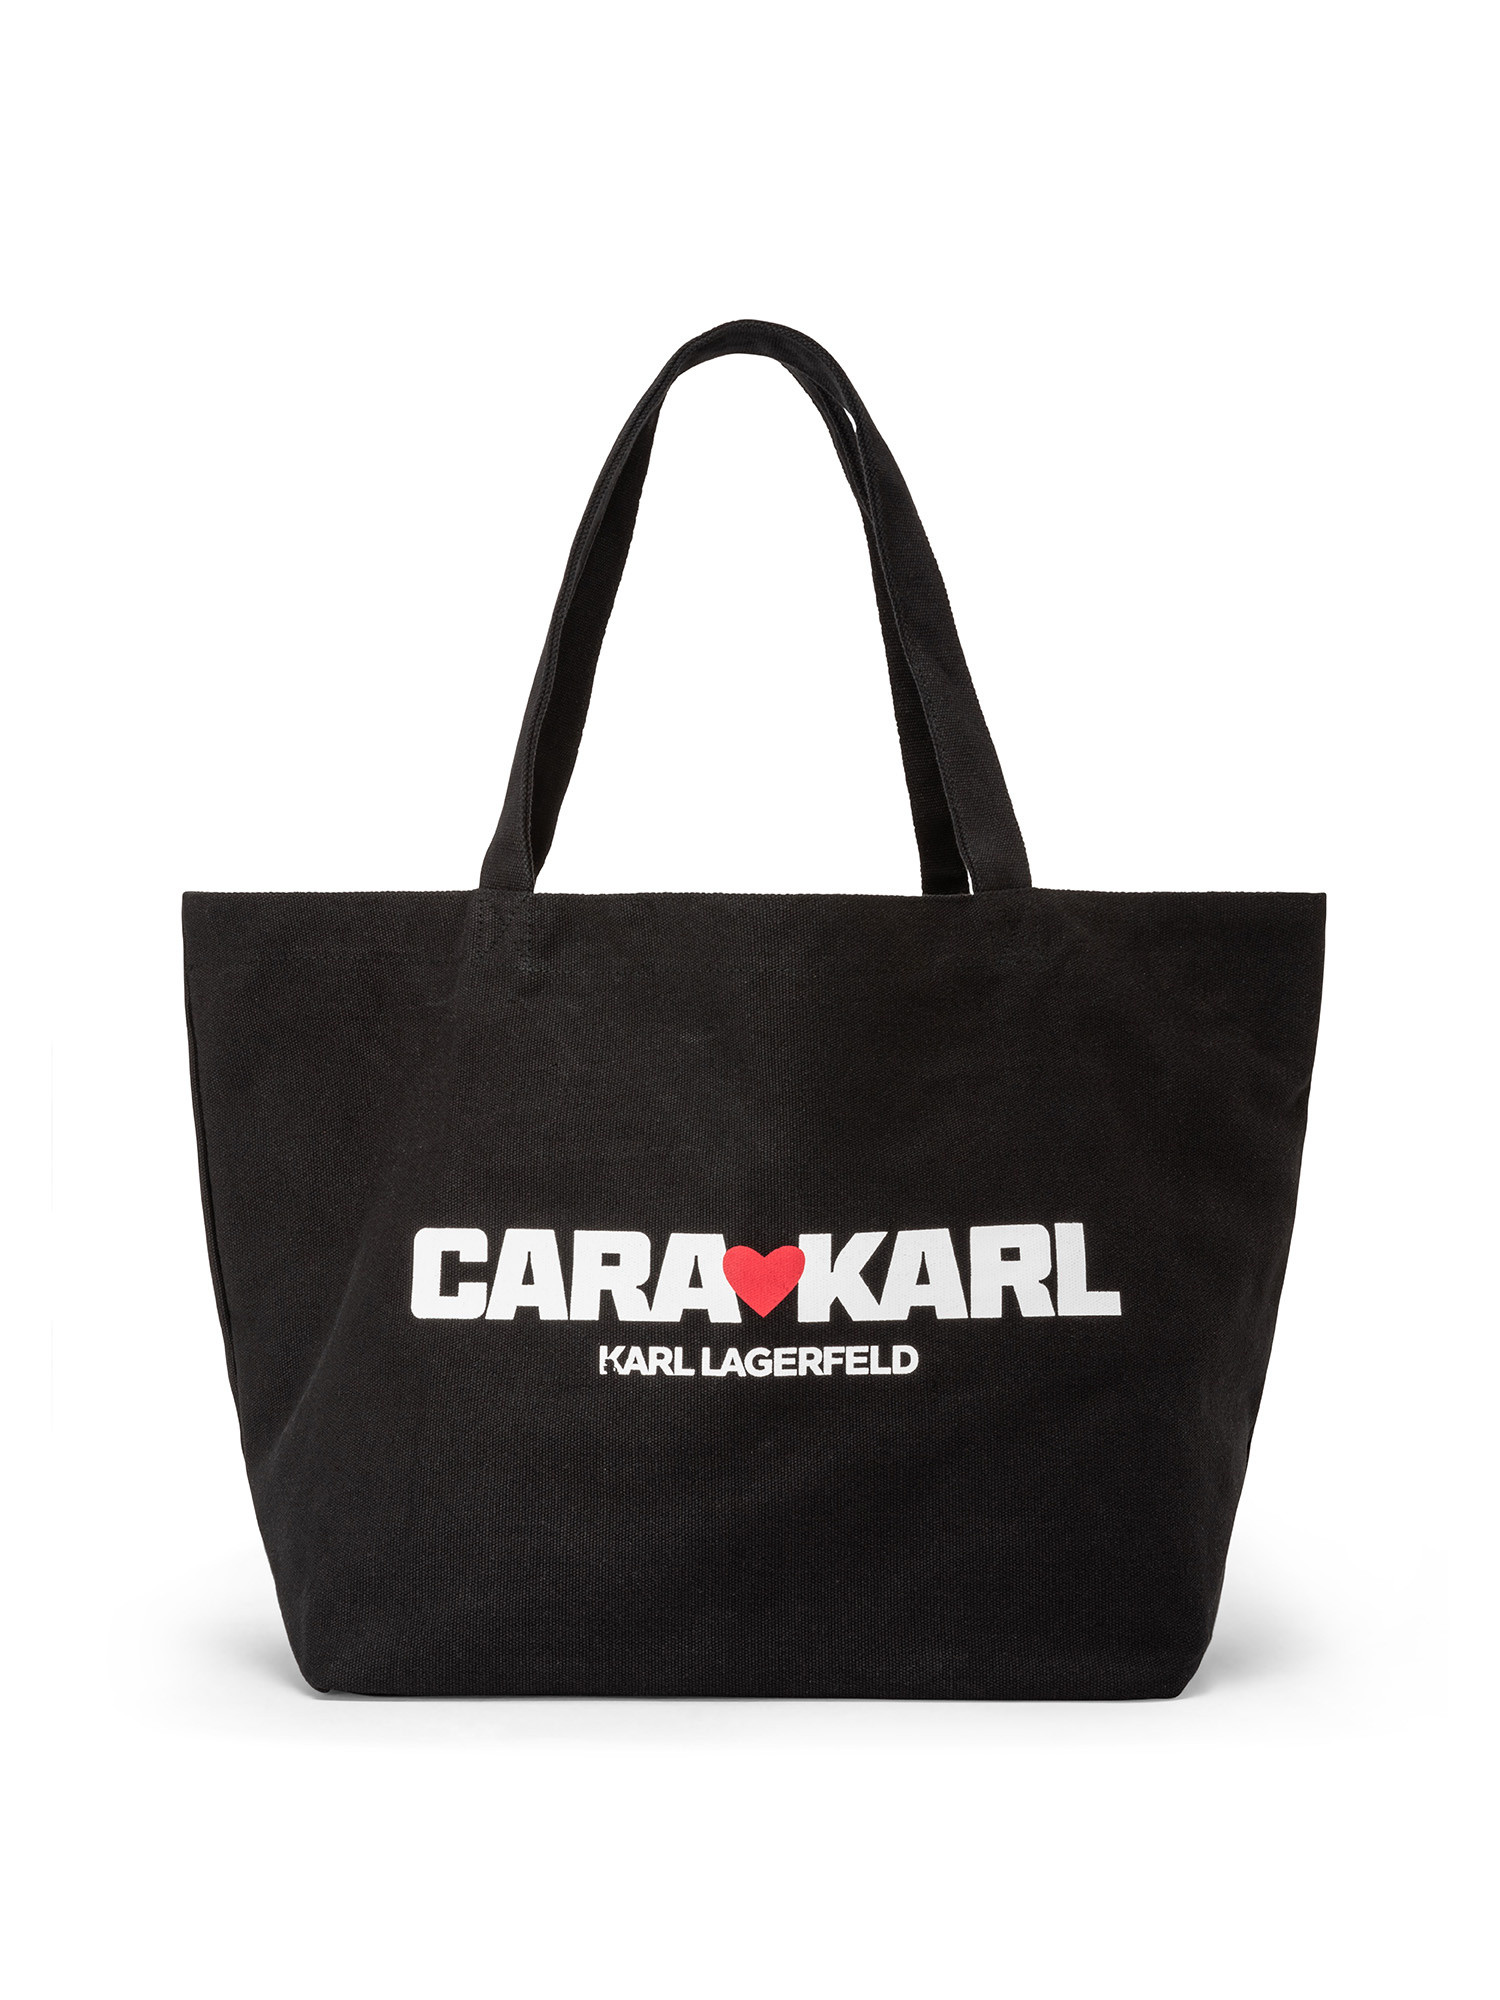 Karl Lagerfeld - Cara loves karl shopper in tela, Black, large image number 0